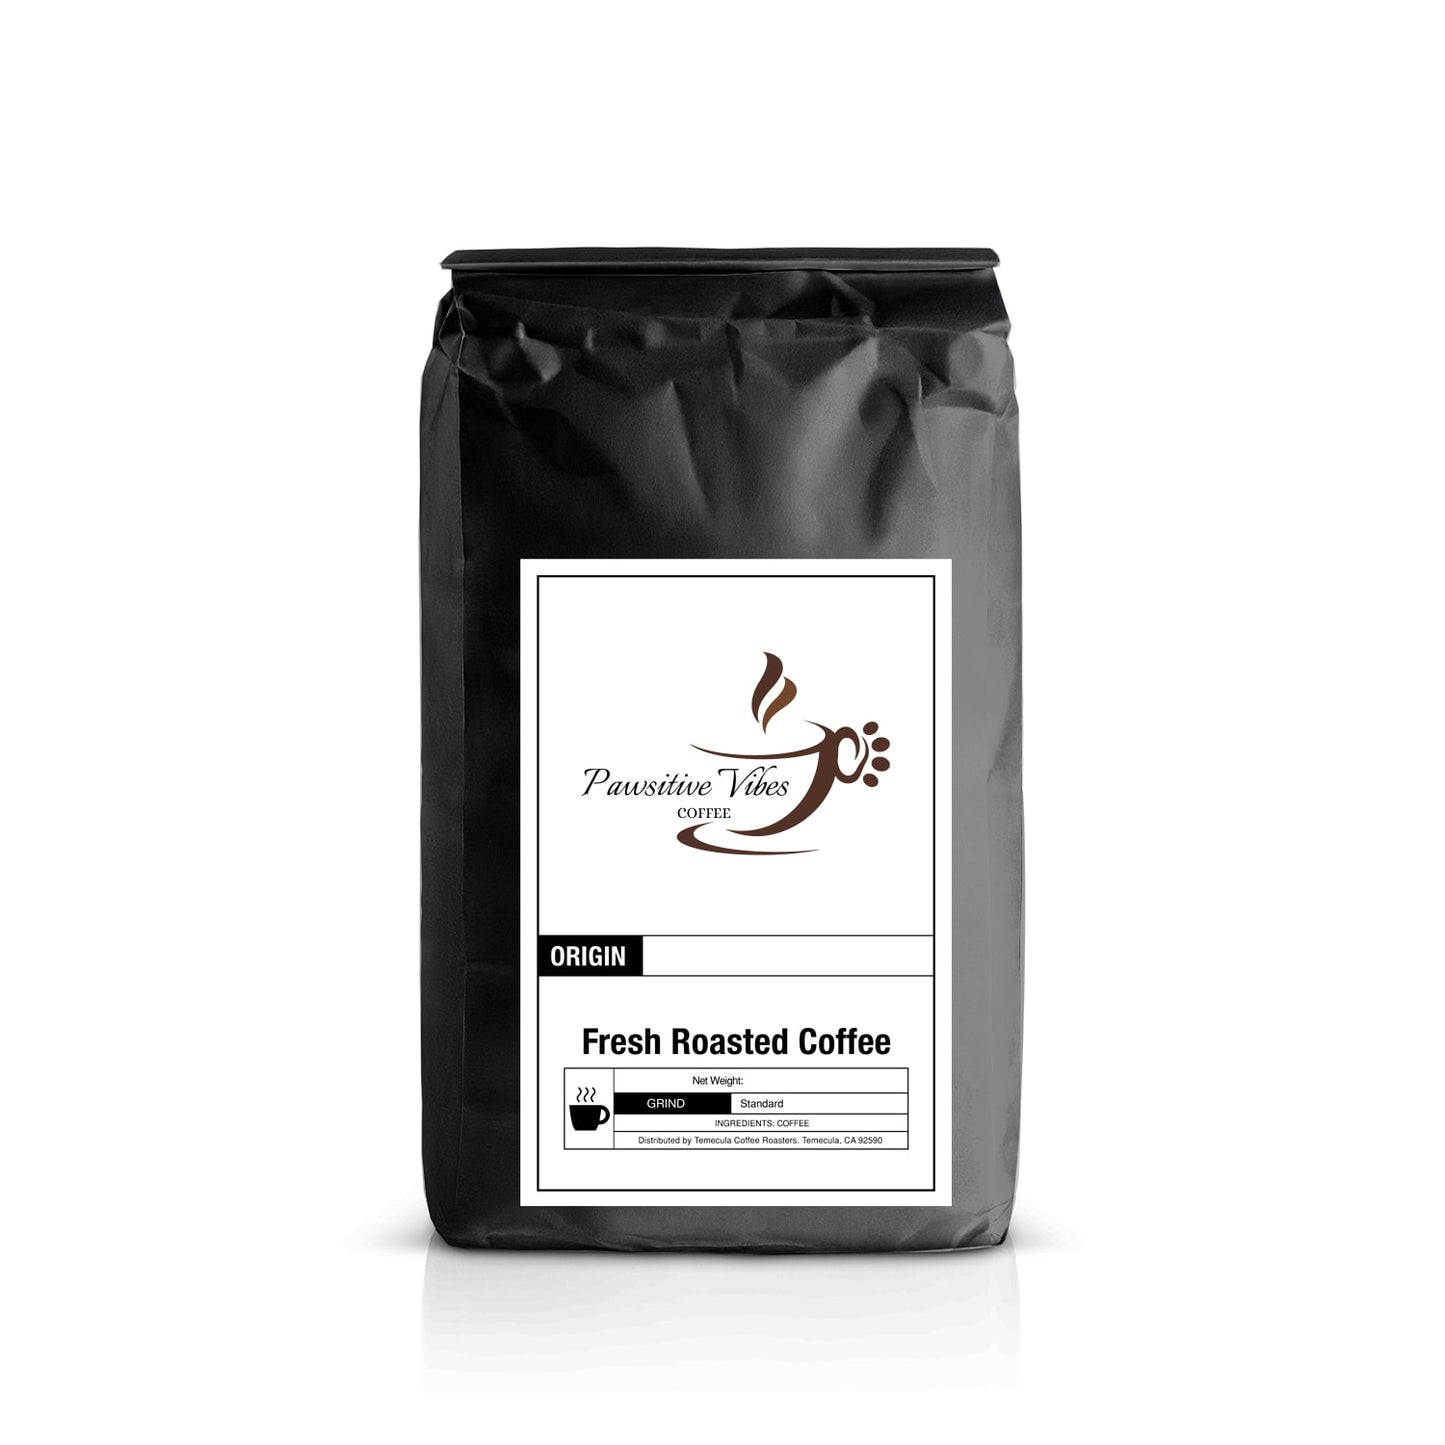 "Premium Brazil Santos Coffee - Rich and Flavorful